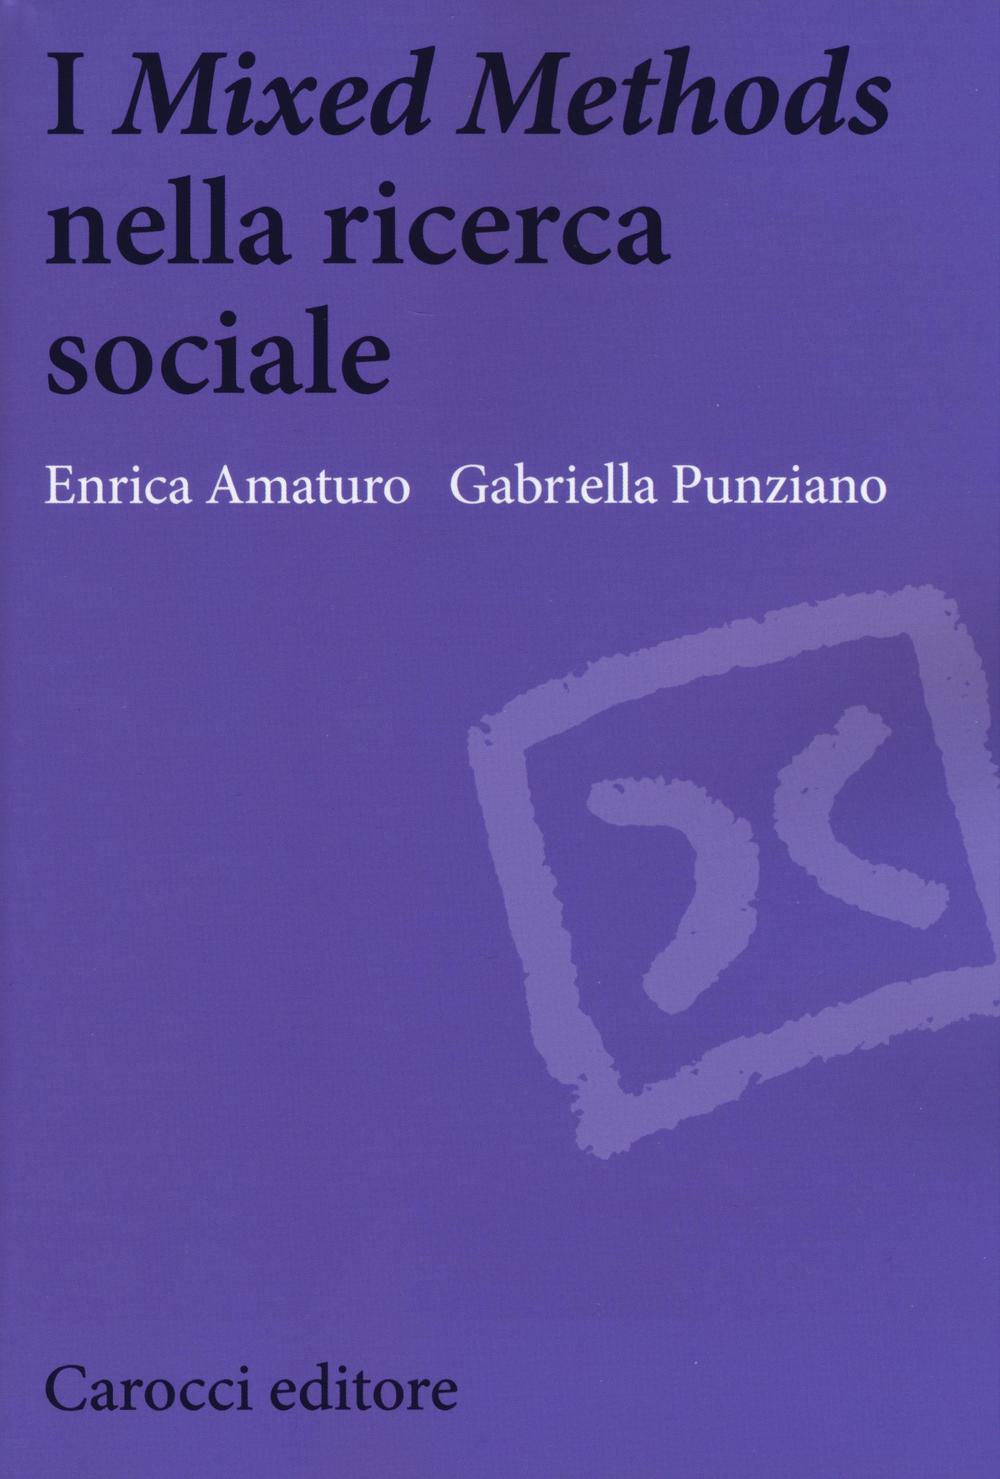 Carte «Mixed Methods» nella ricerca sociale Enrica Amaturo